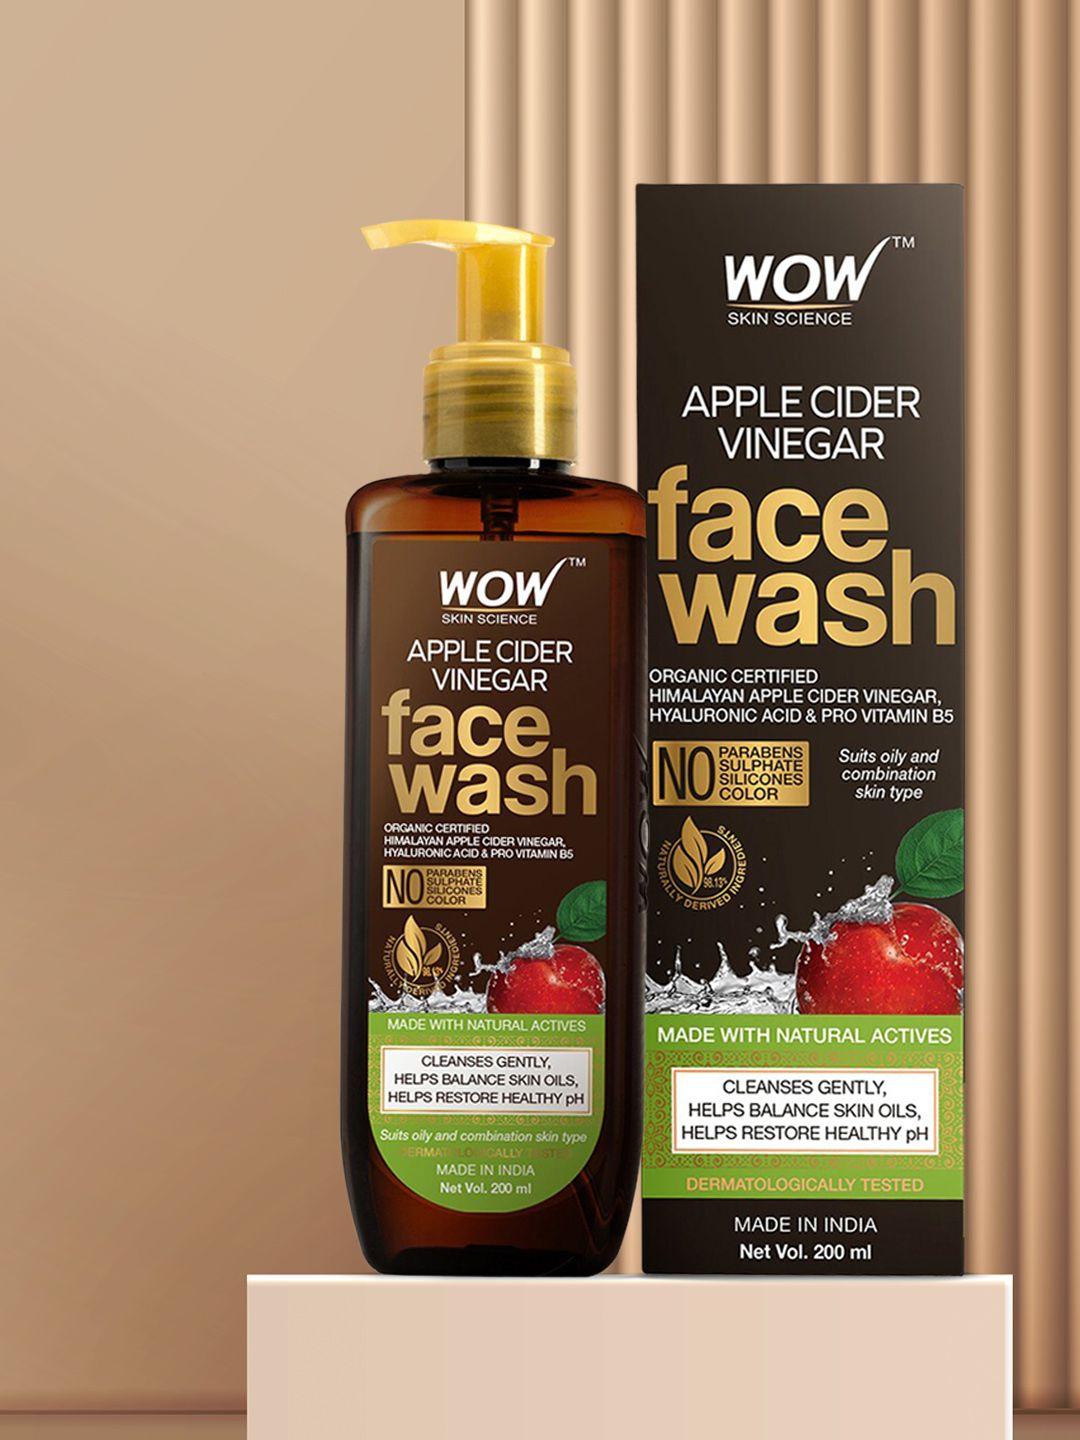 wow skin science apple cider vinegar face wash 200 ml